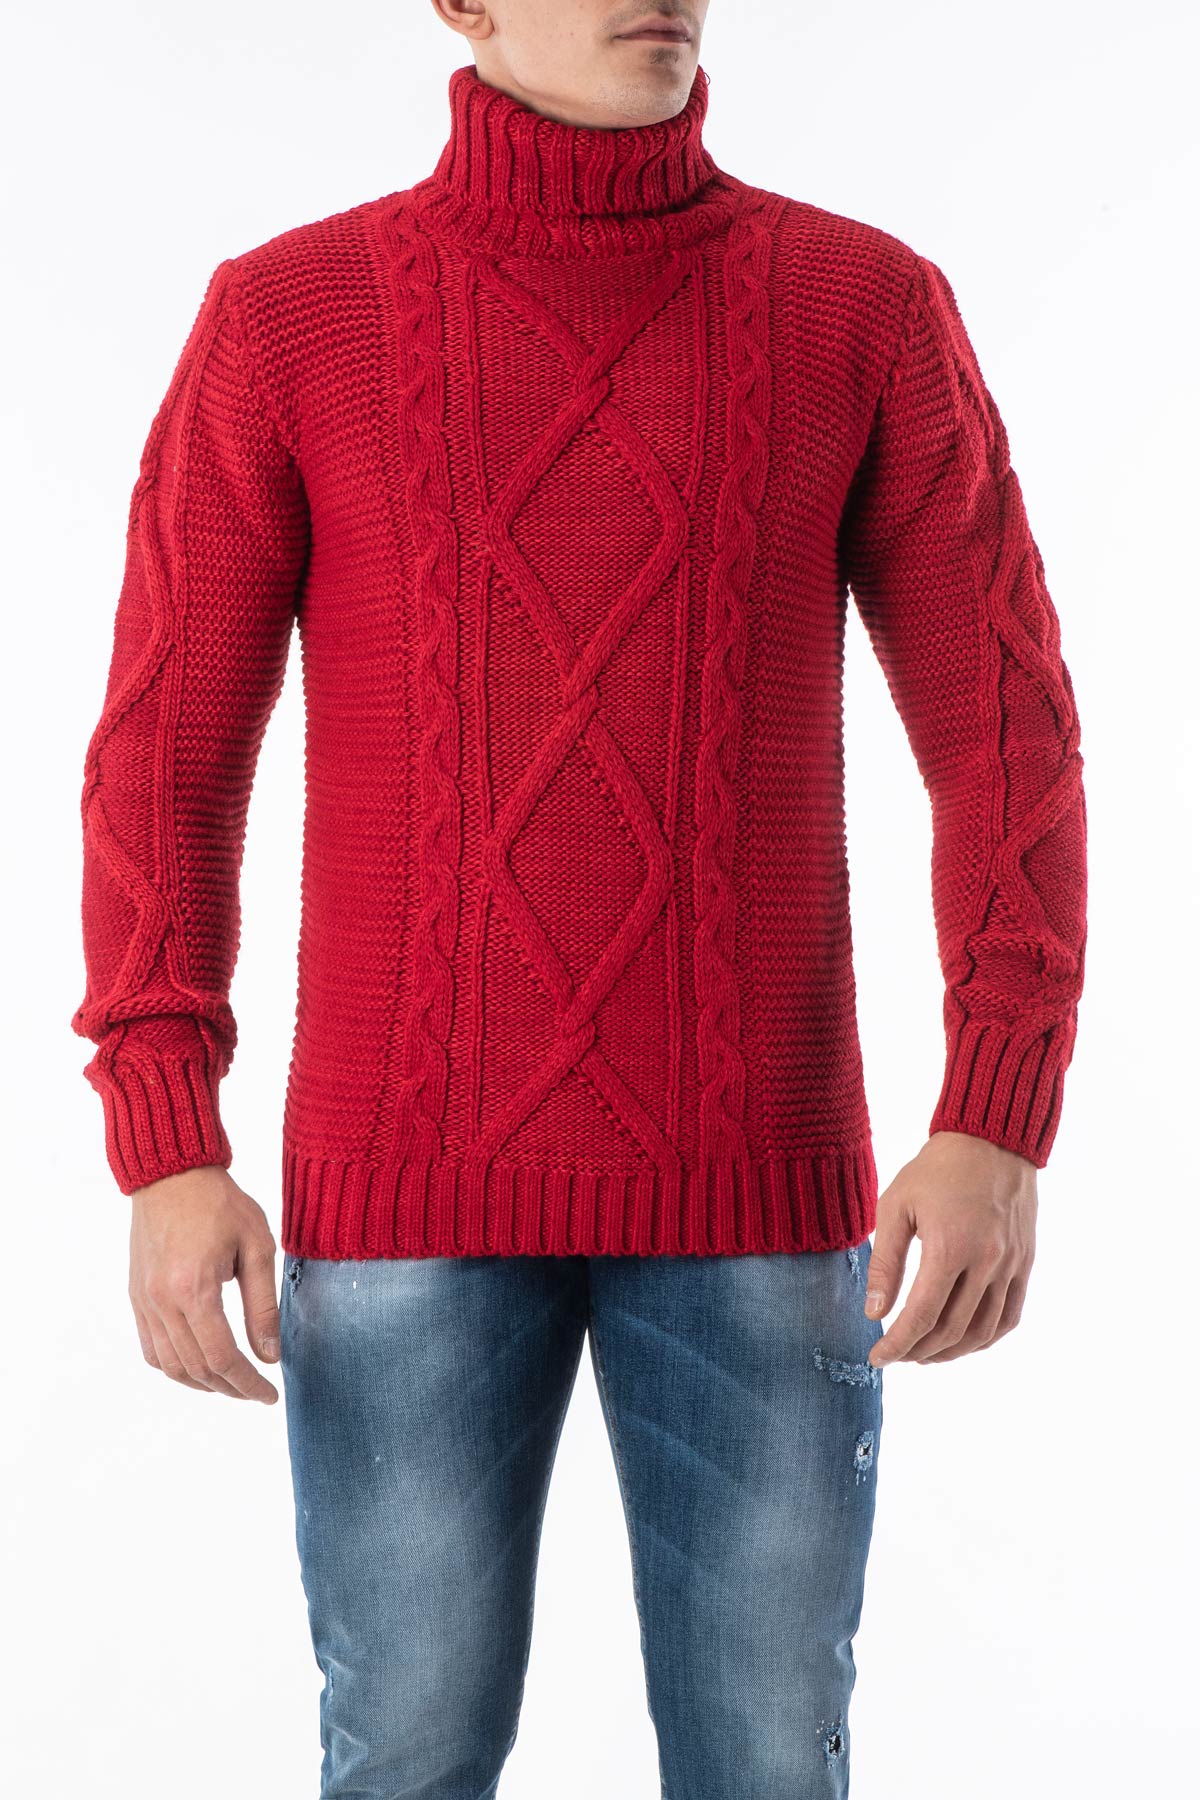 Resolute Turtleneck Sweater